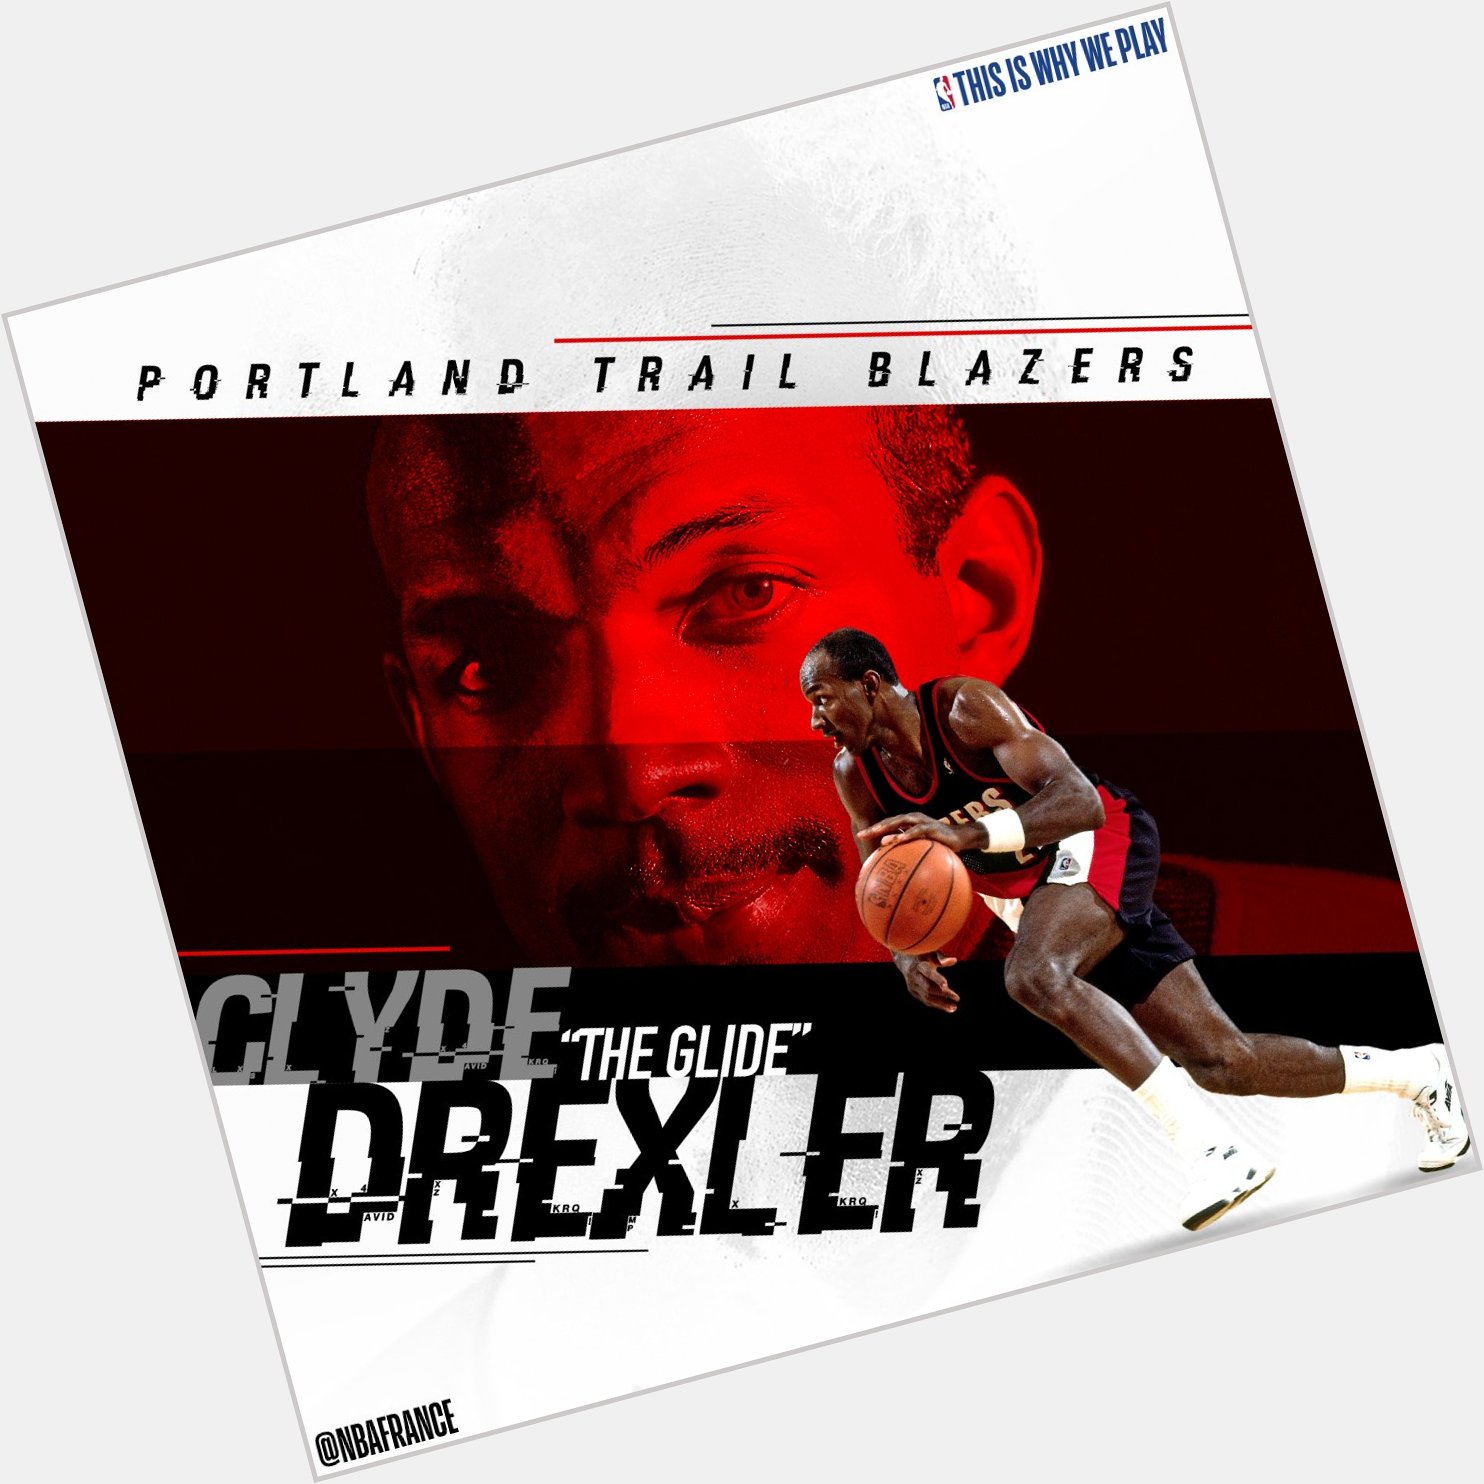  Hall Of Famer 1995 Champ 10x All-Star 5x All-NBA 

Happy Birthday Clyde Drexler ! 